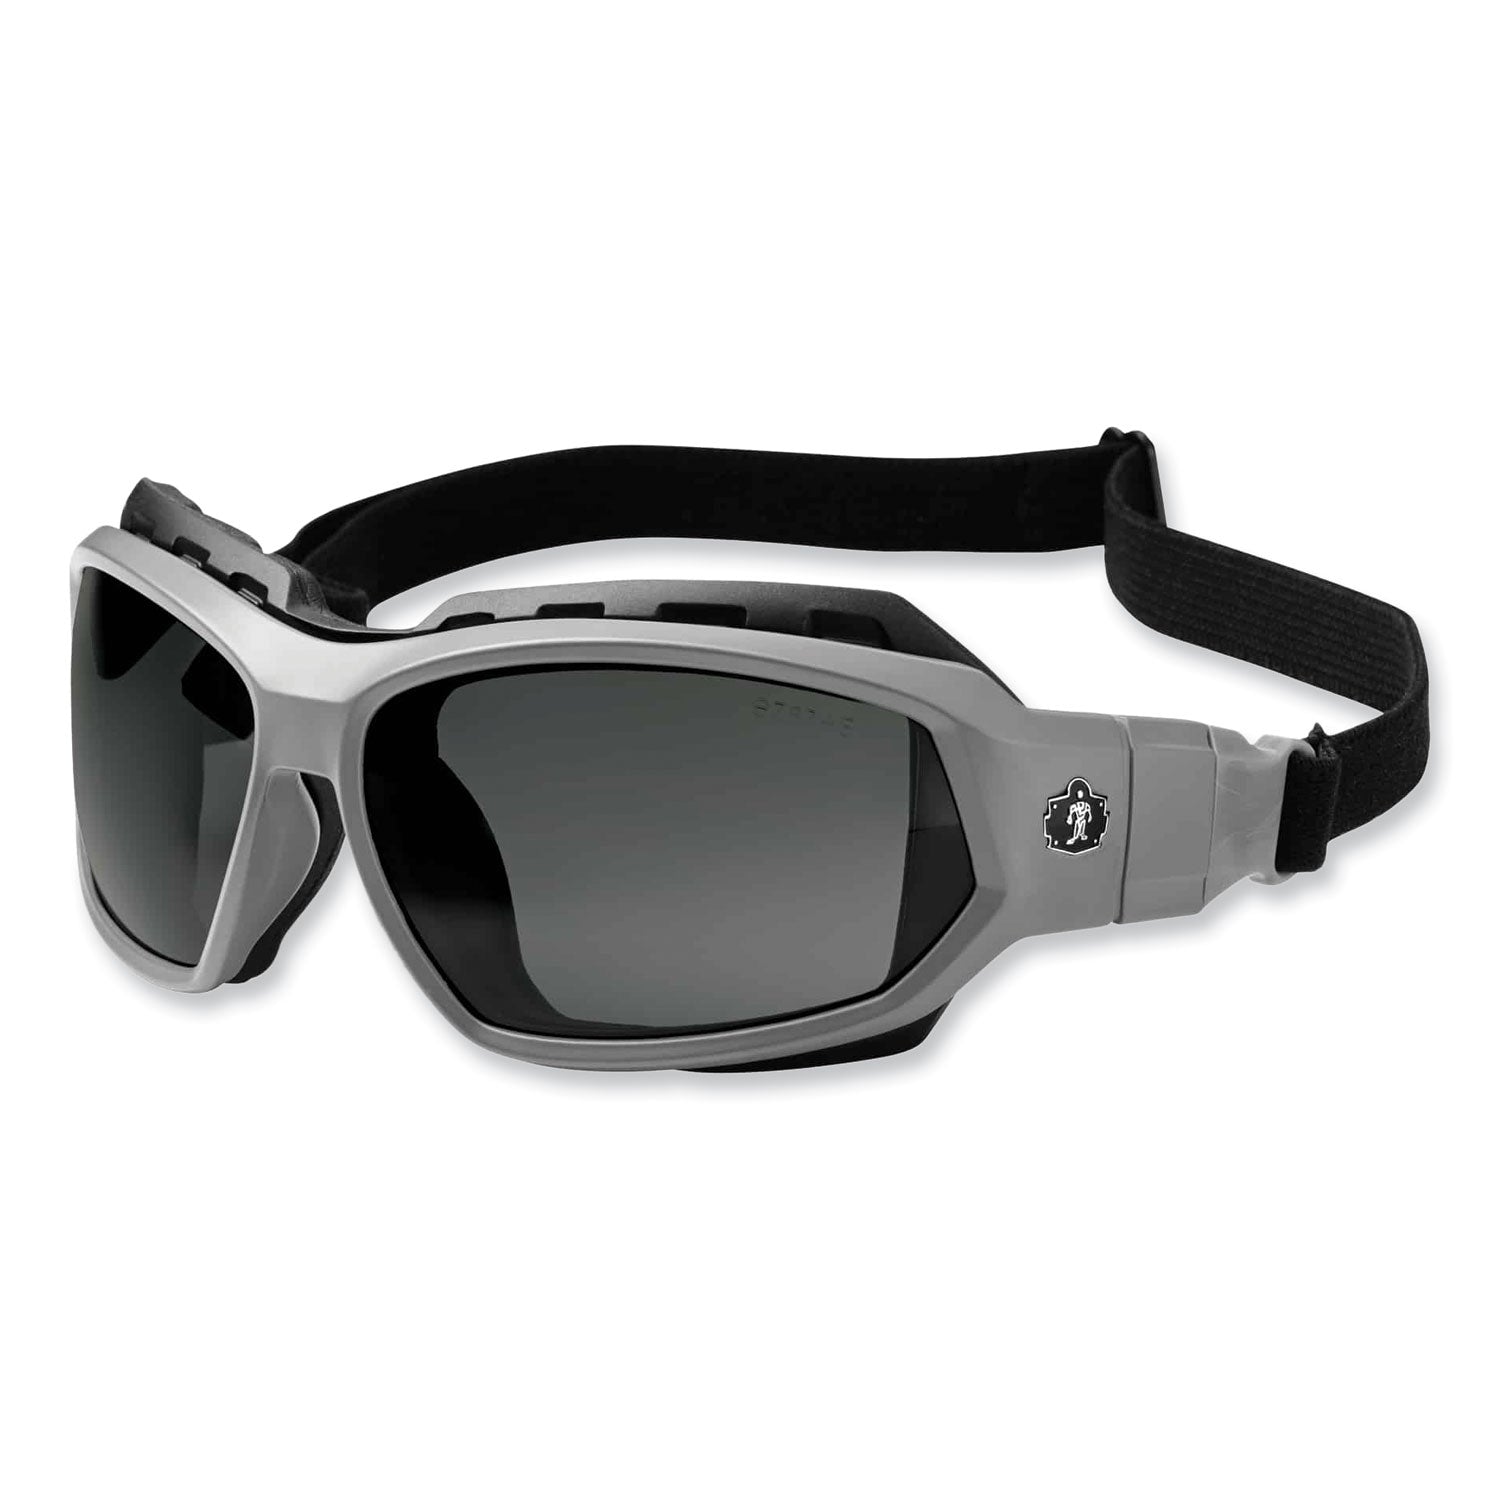 skullerz-loki-safety-glasses-goggles-matte-gray-nylon-impact-frame-polarized-smoke-polycarb-lensships-in-1-3-business-days_ego56131 - 2